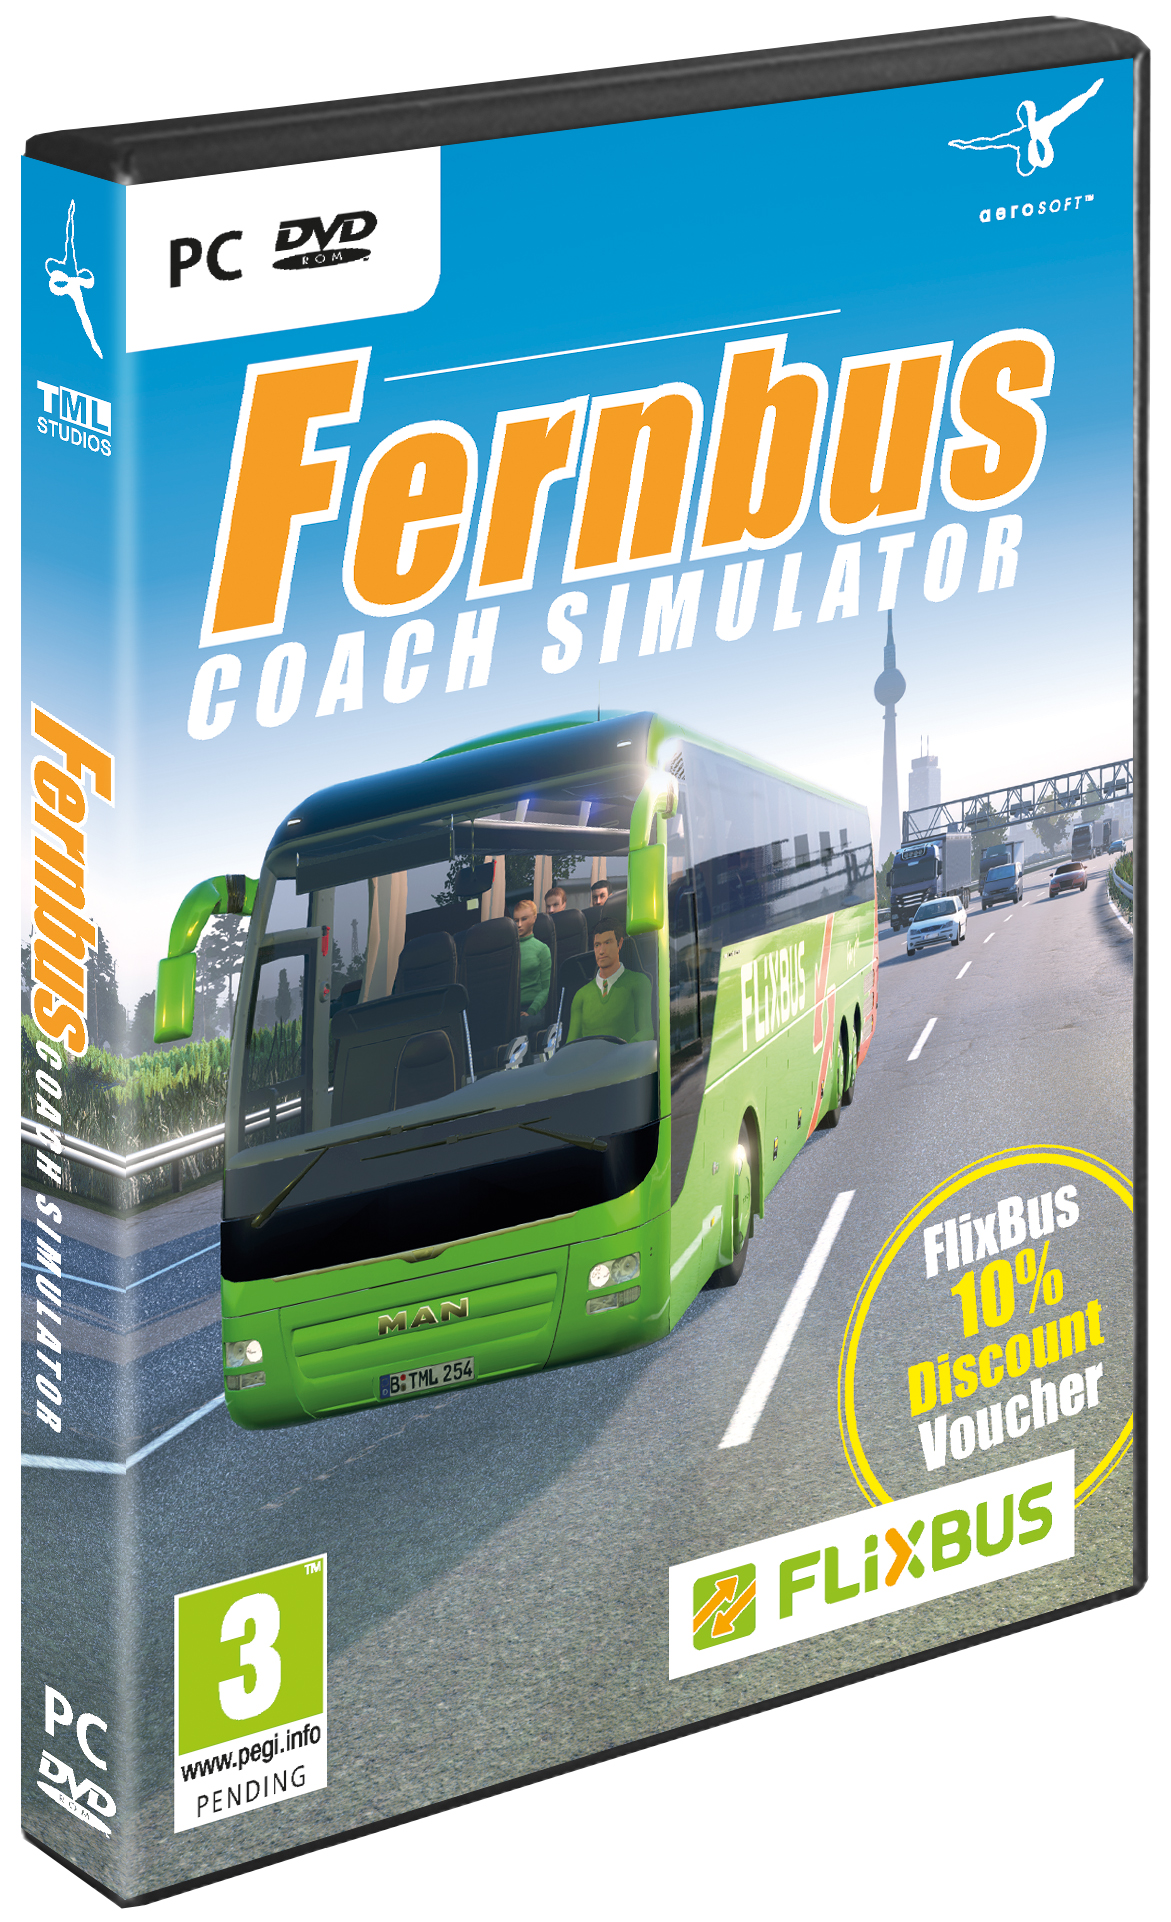 download fernbus coach simulator free